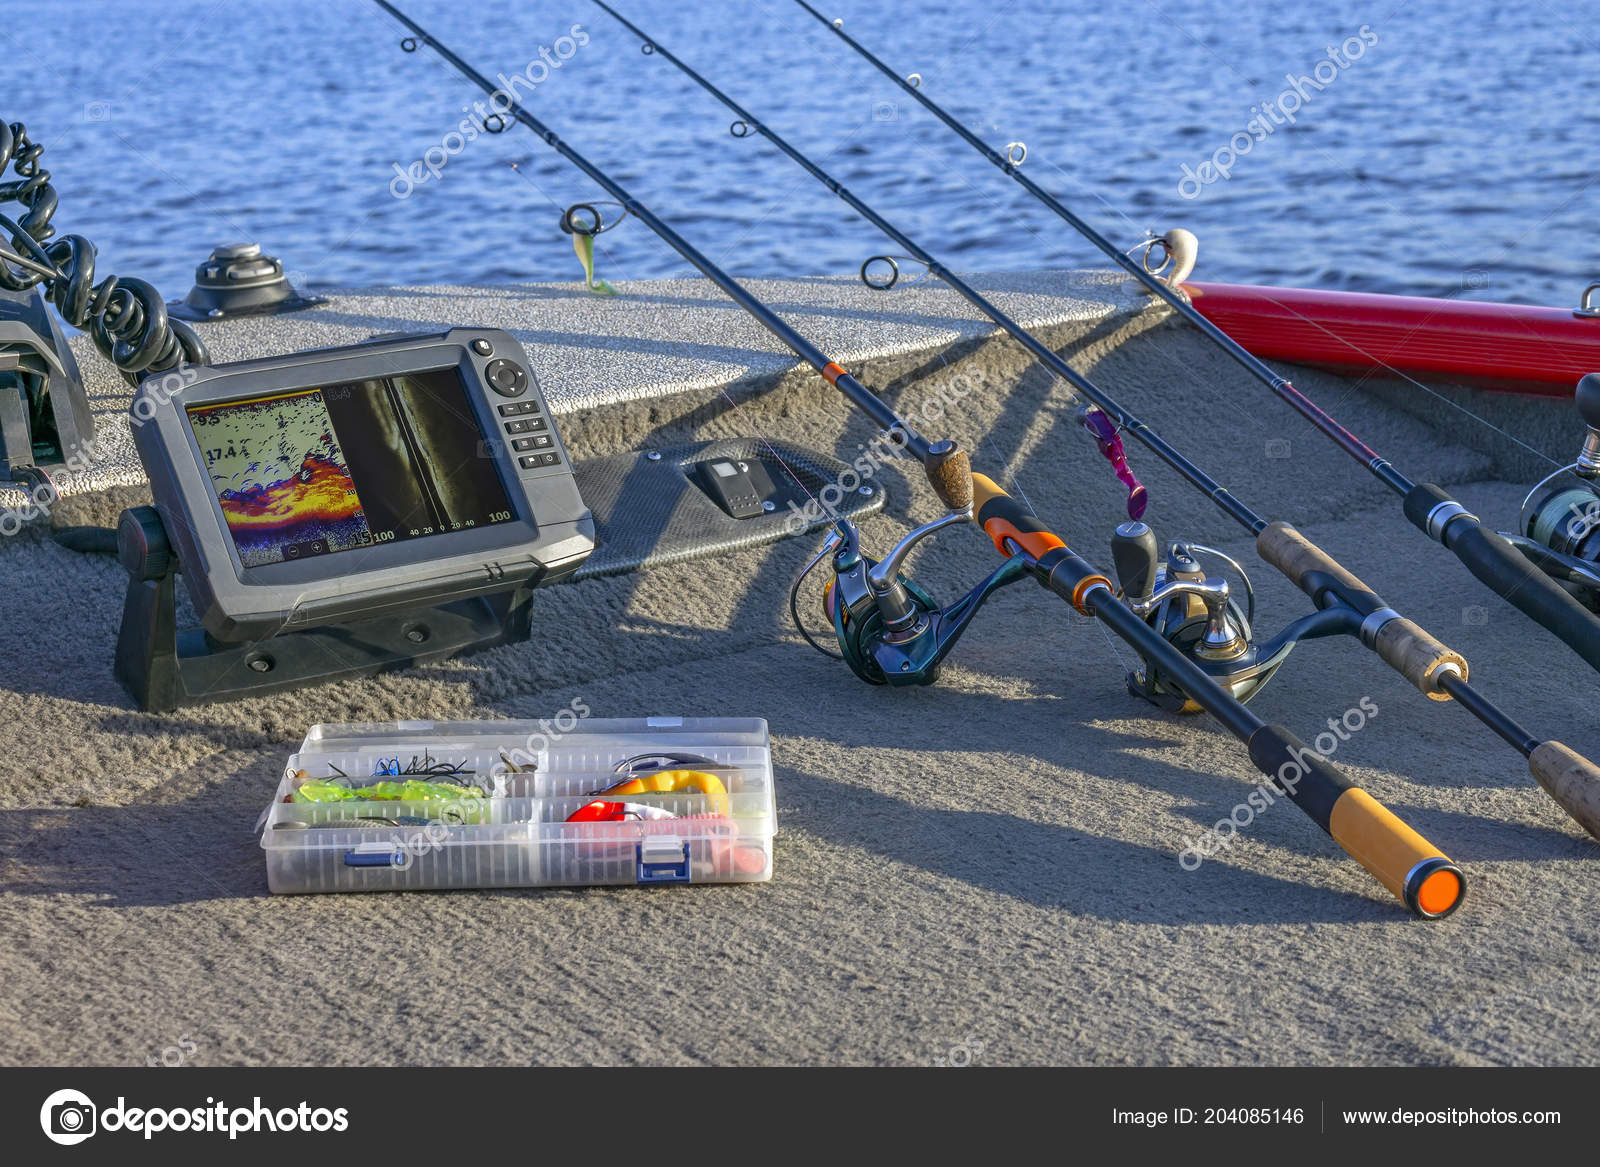 https://st4.depositphotos.com/17928540/20408/i/1600/depositphotos_204085146-stock-photo-fishing-tackle-set-fishfinder-echolot.jpg